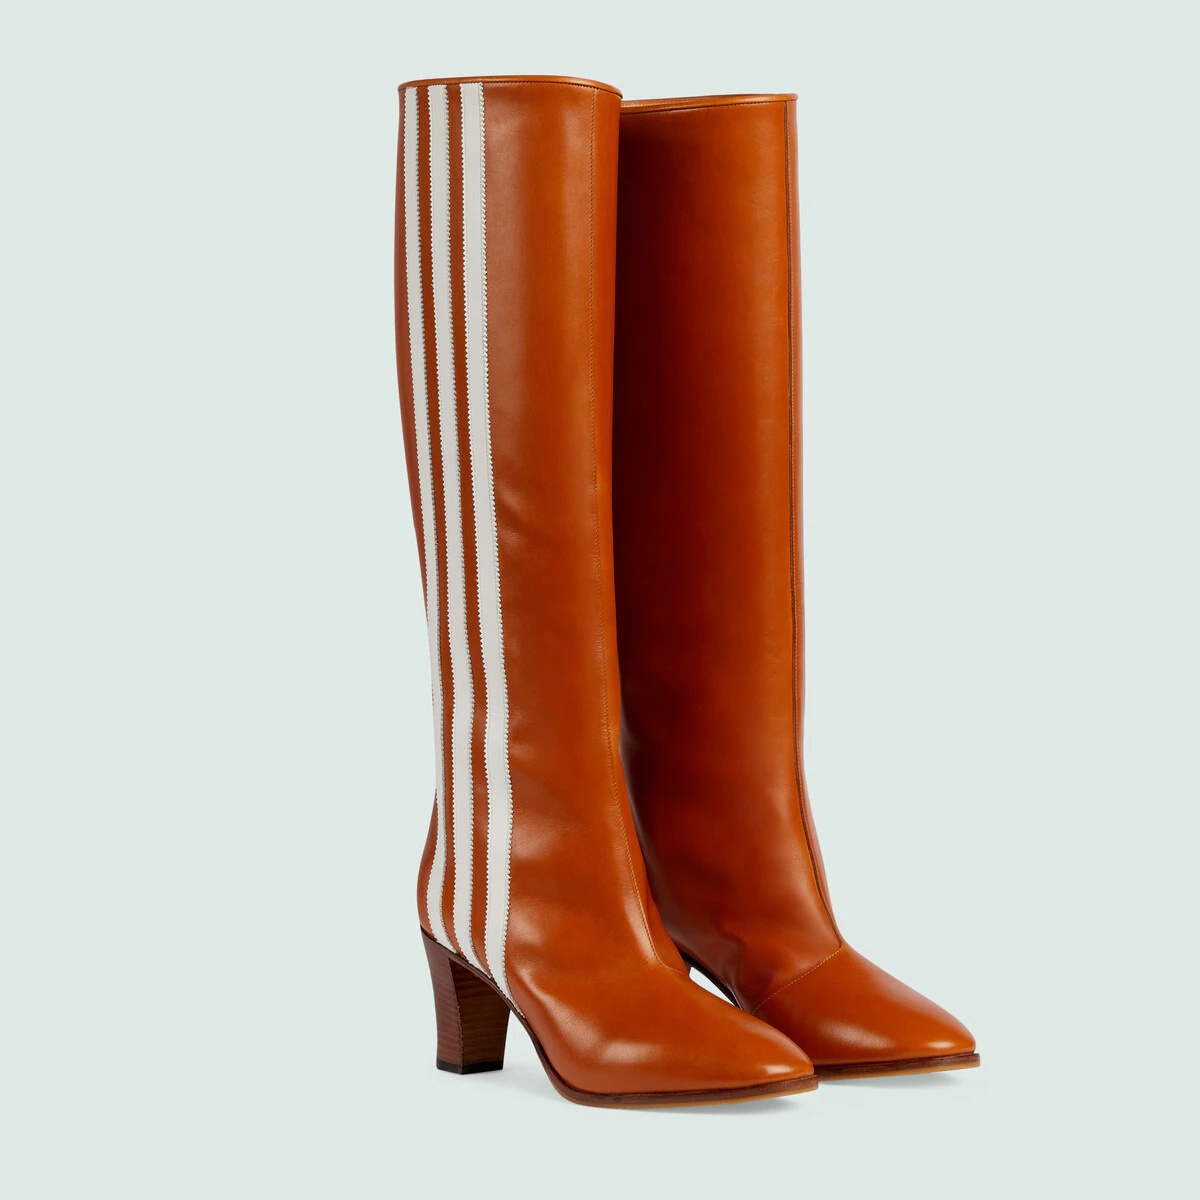 adidas x Gucci women's knee-high boot - 2